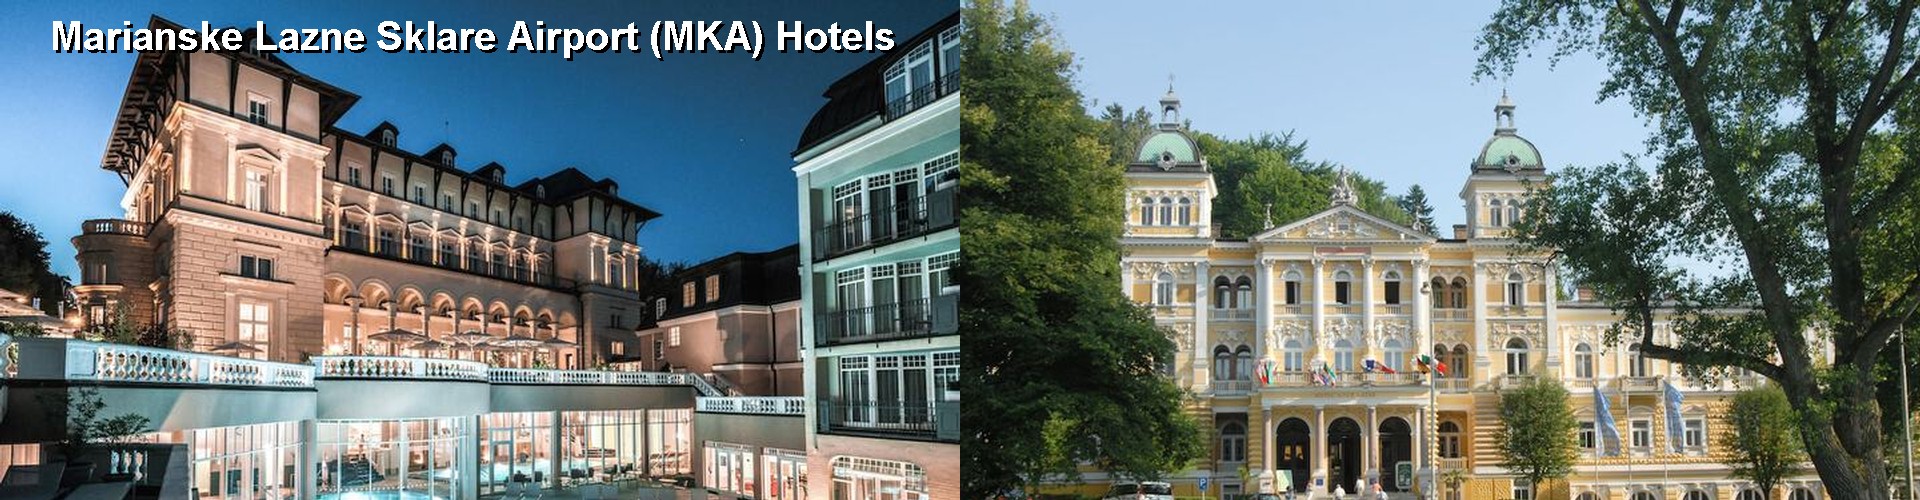 5 Best Hotels near Marianske Lazne Sklare Airport (MKA)